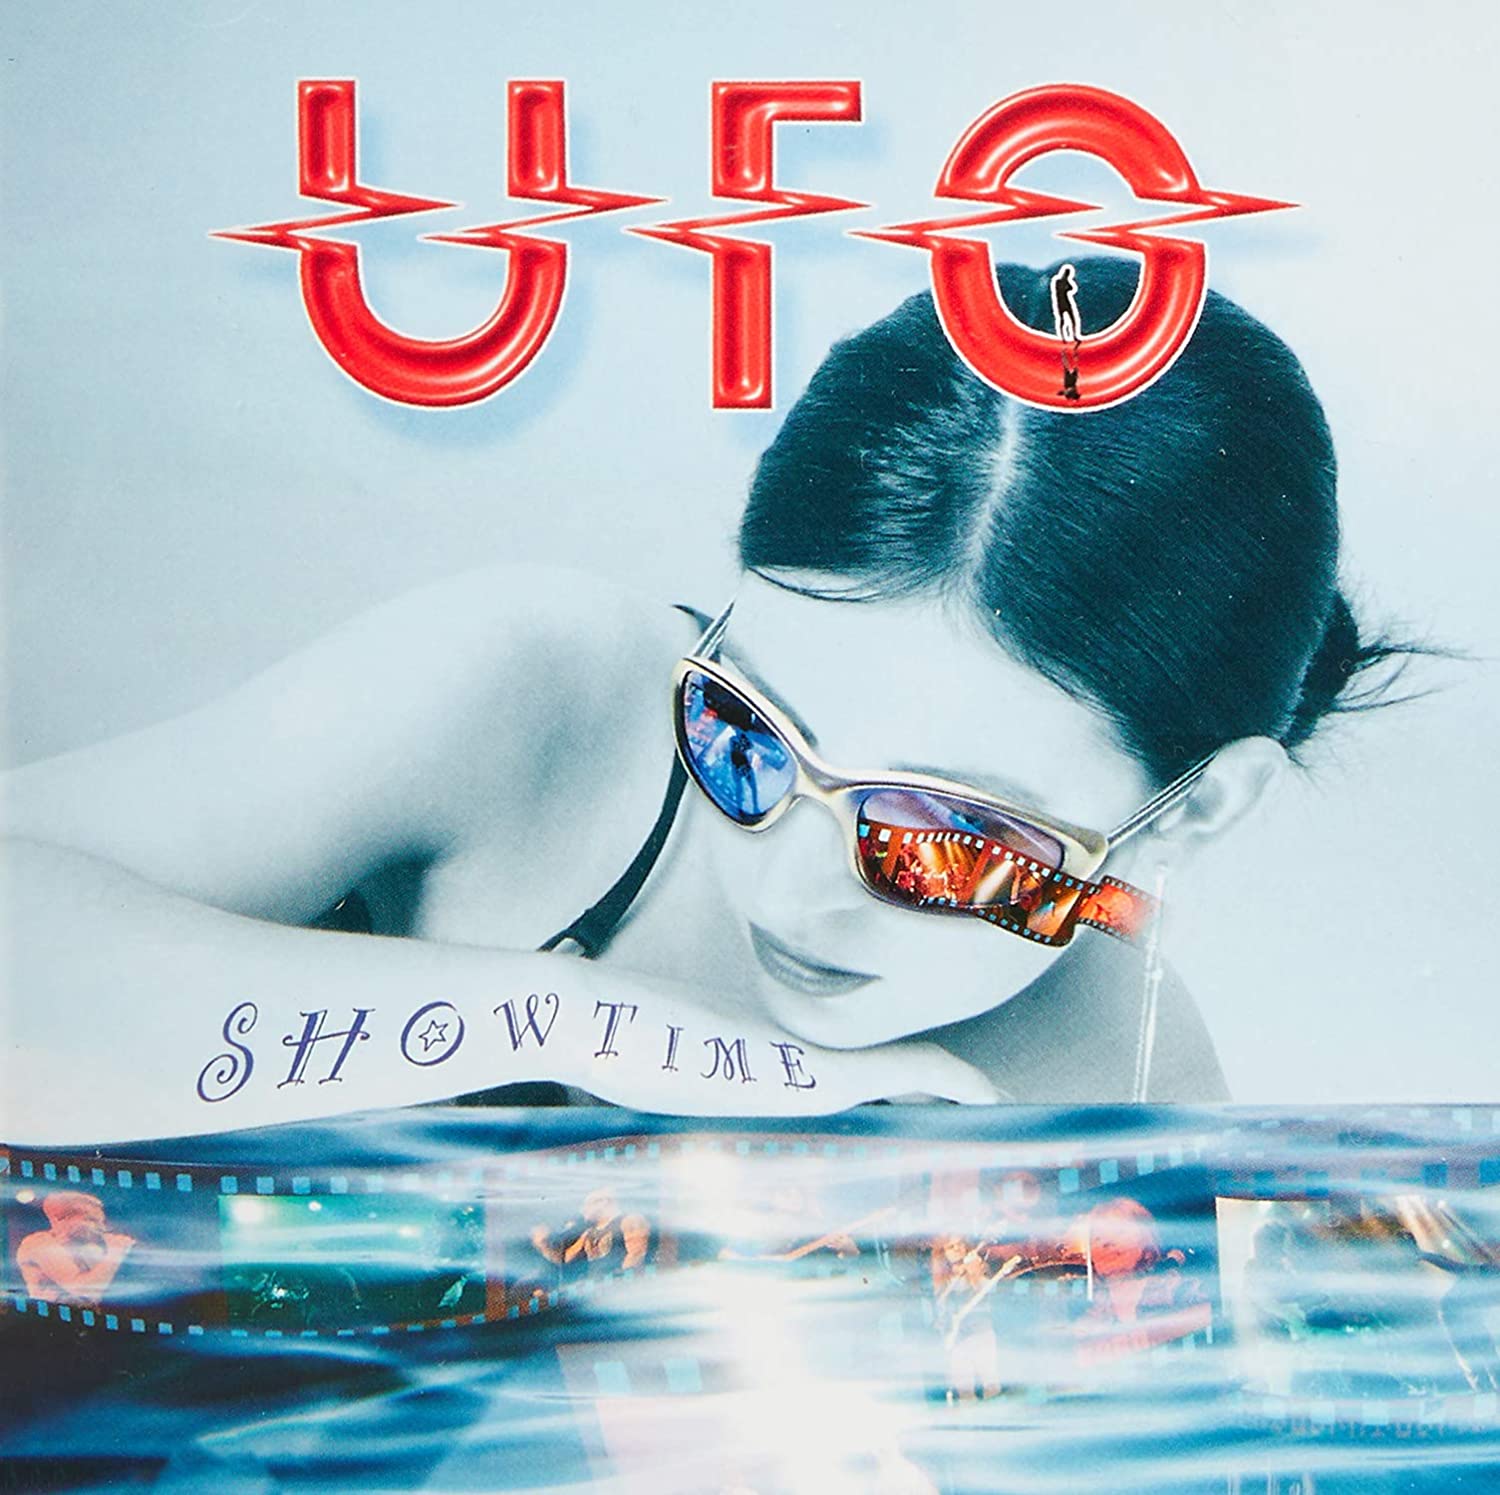 ufo band album covers